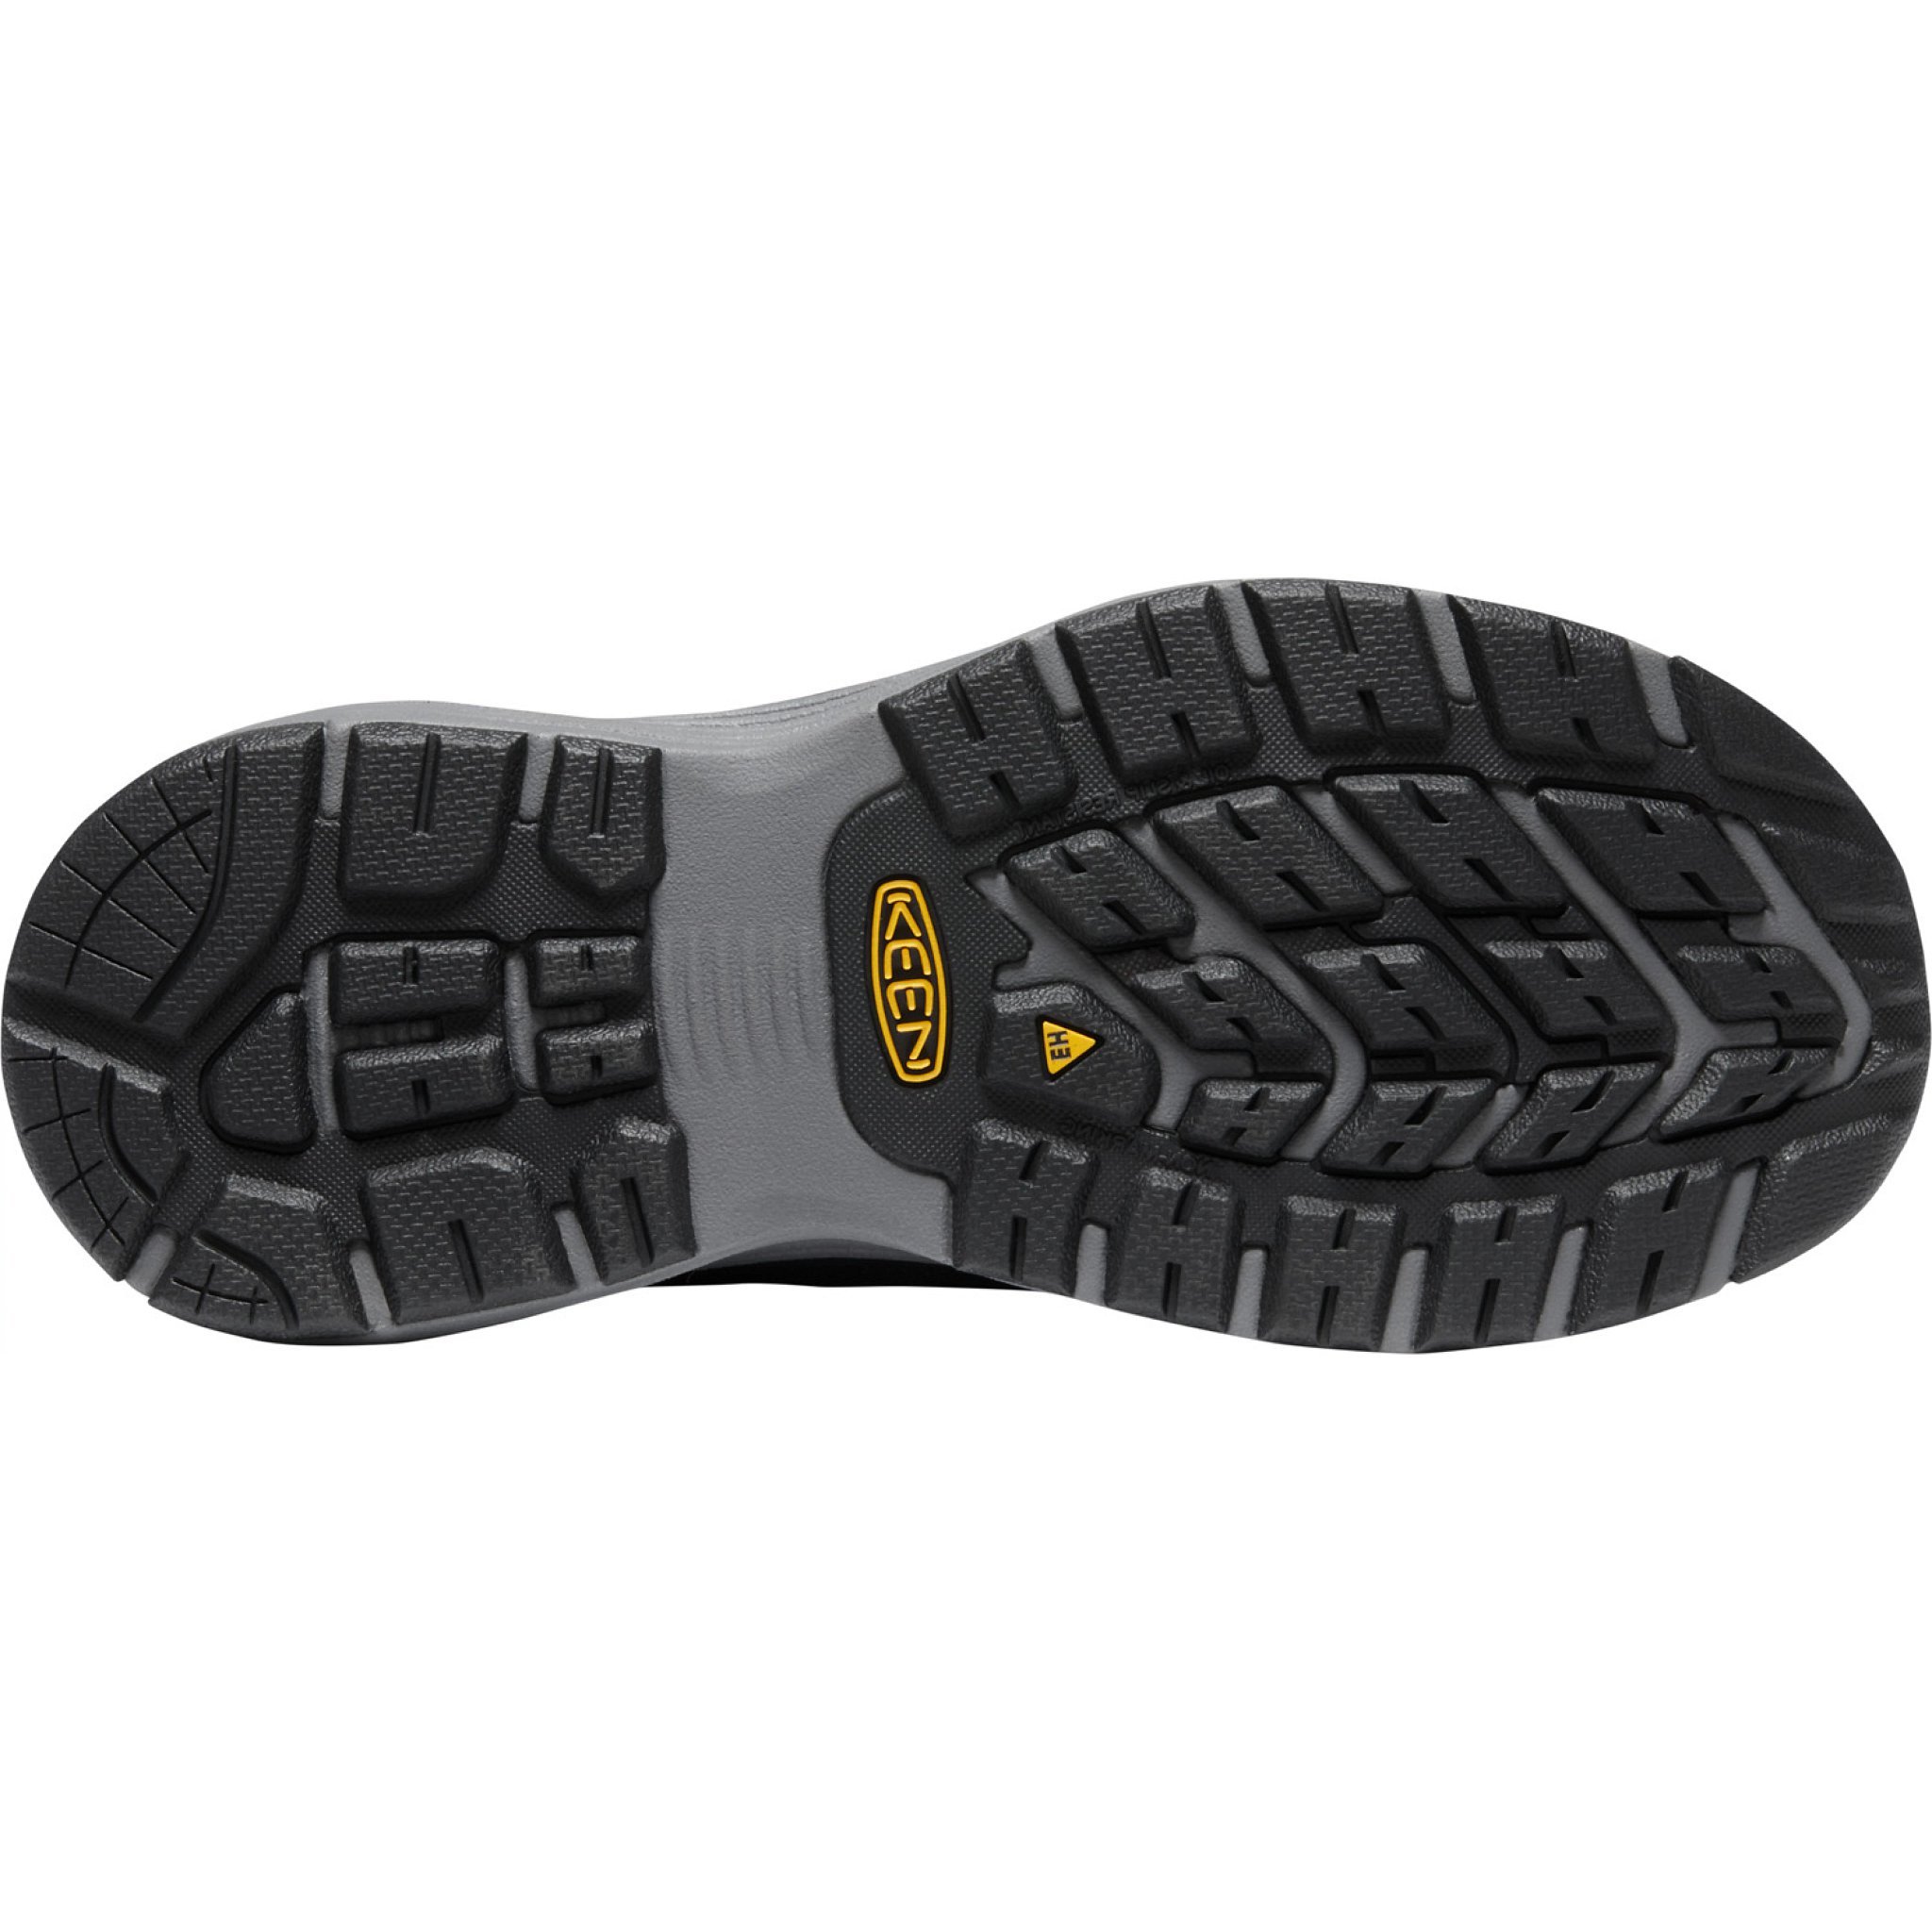 KEEN Utility Women's SPARTA II Aluminum Toe Work Shoe- Black - 1025570  - Overlook Boots